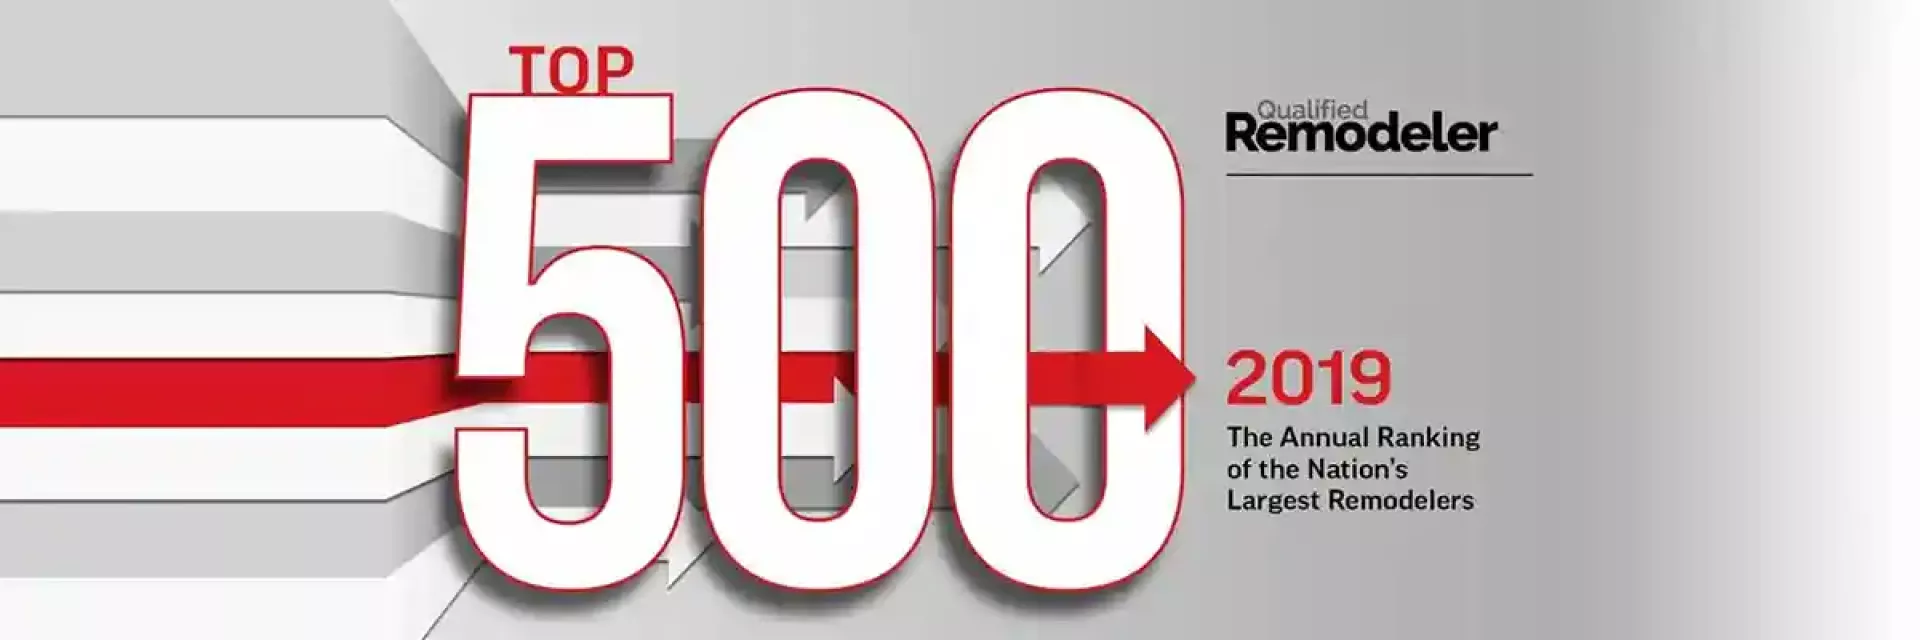 Qualified Remodeler Top 500 2019 logo